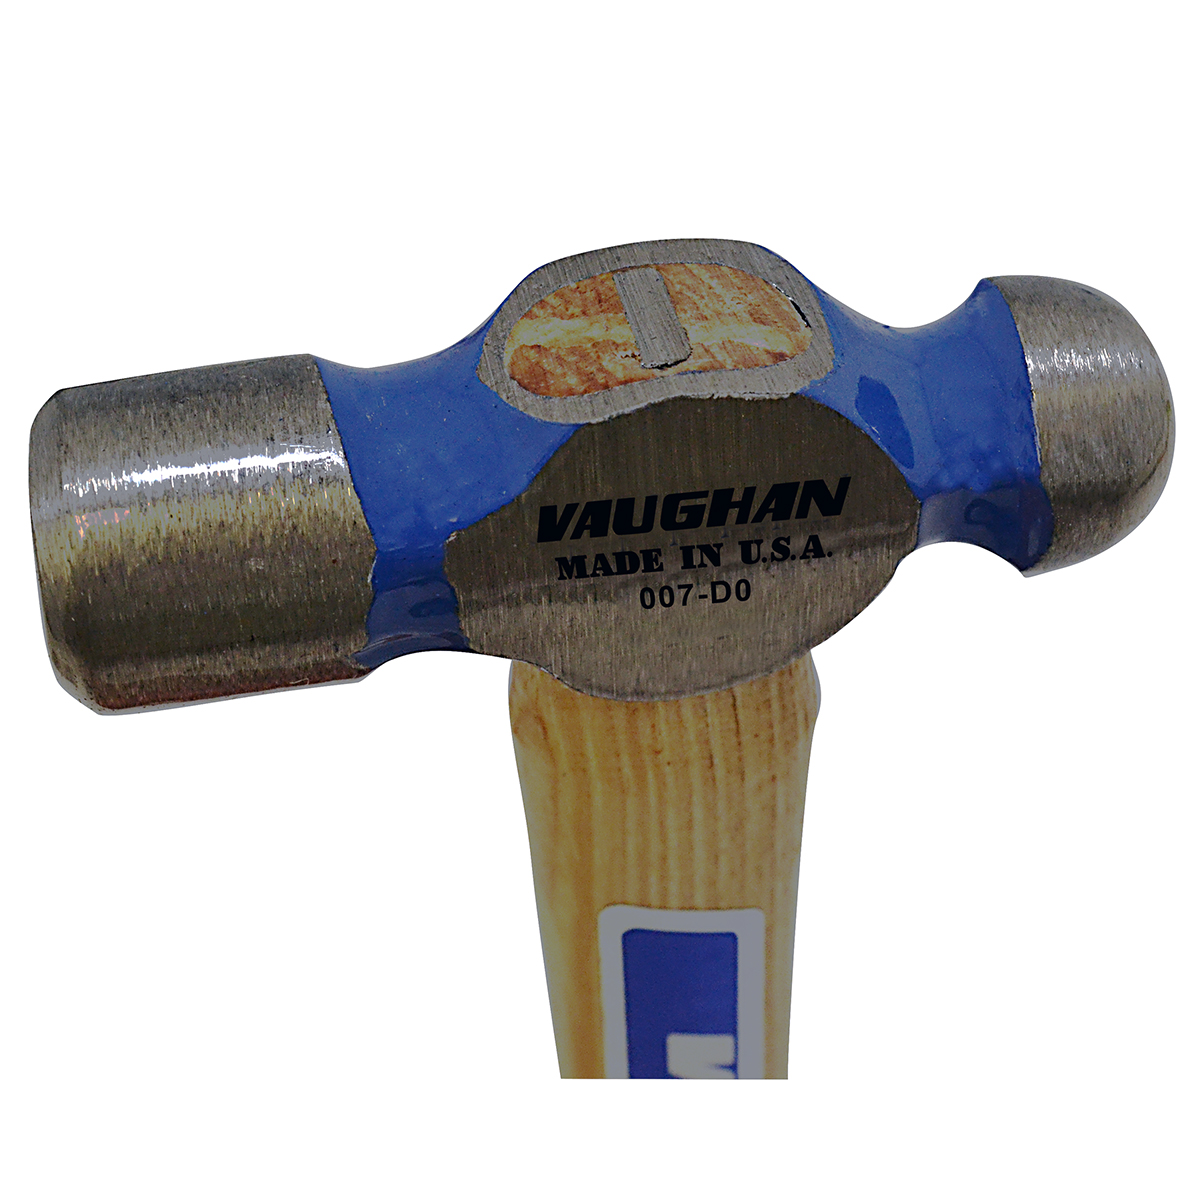 Vaughan 151-30 TC504 Hickory Handle Ball Pein Hammer 4-Ounce Head 